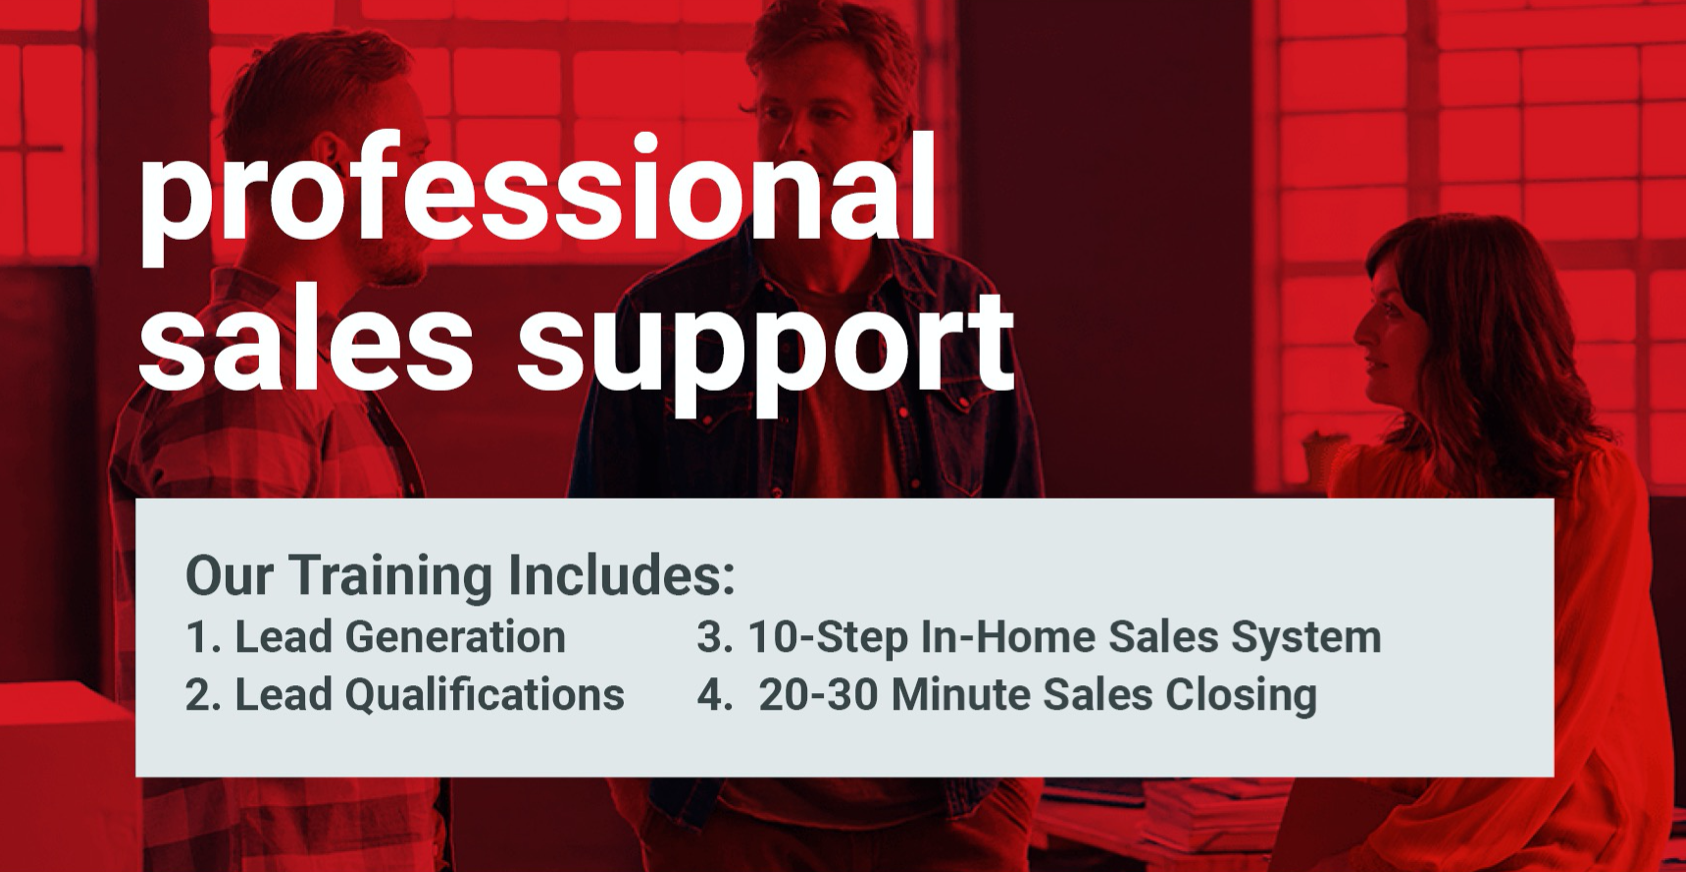 sales_training